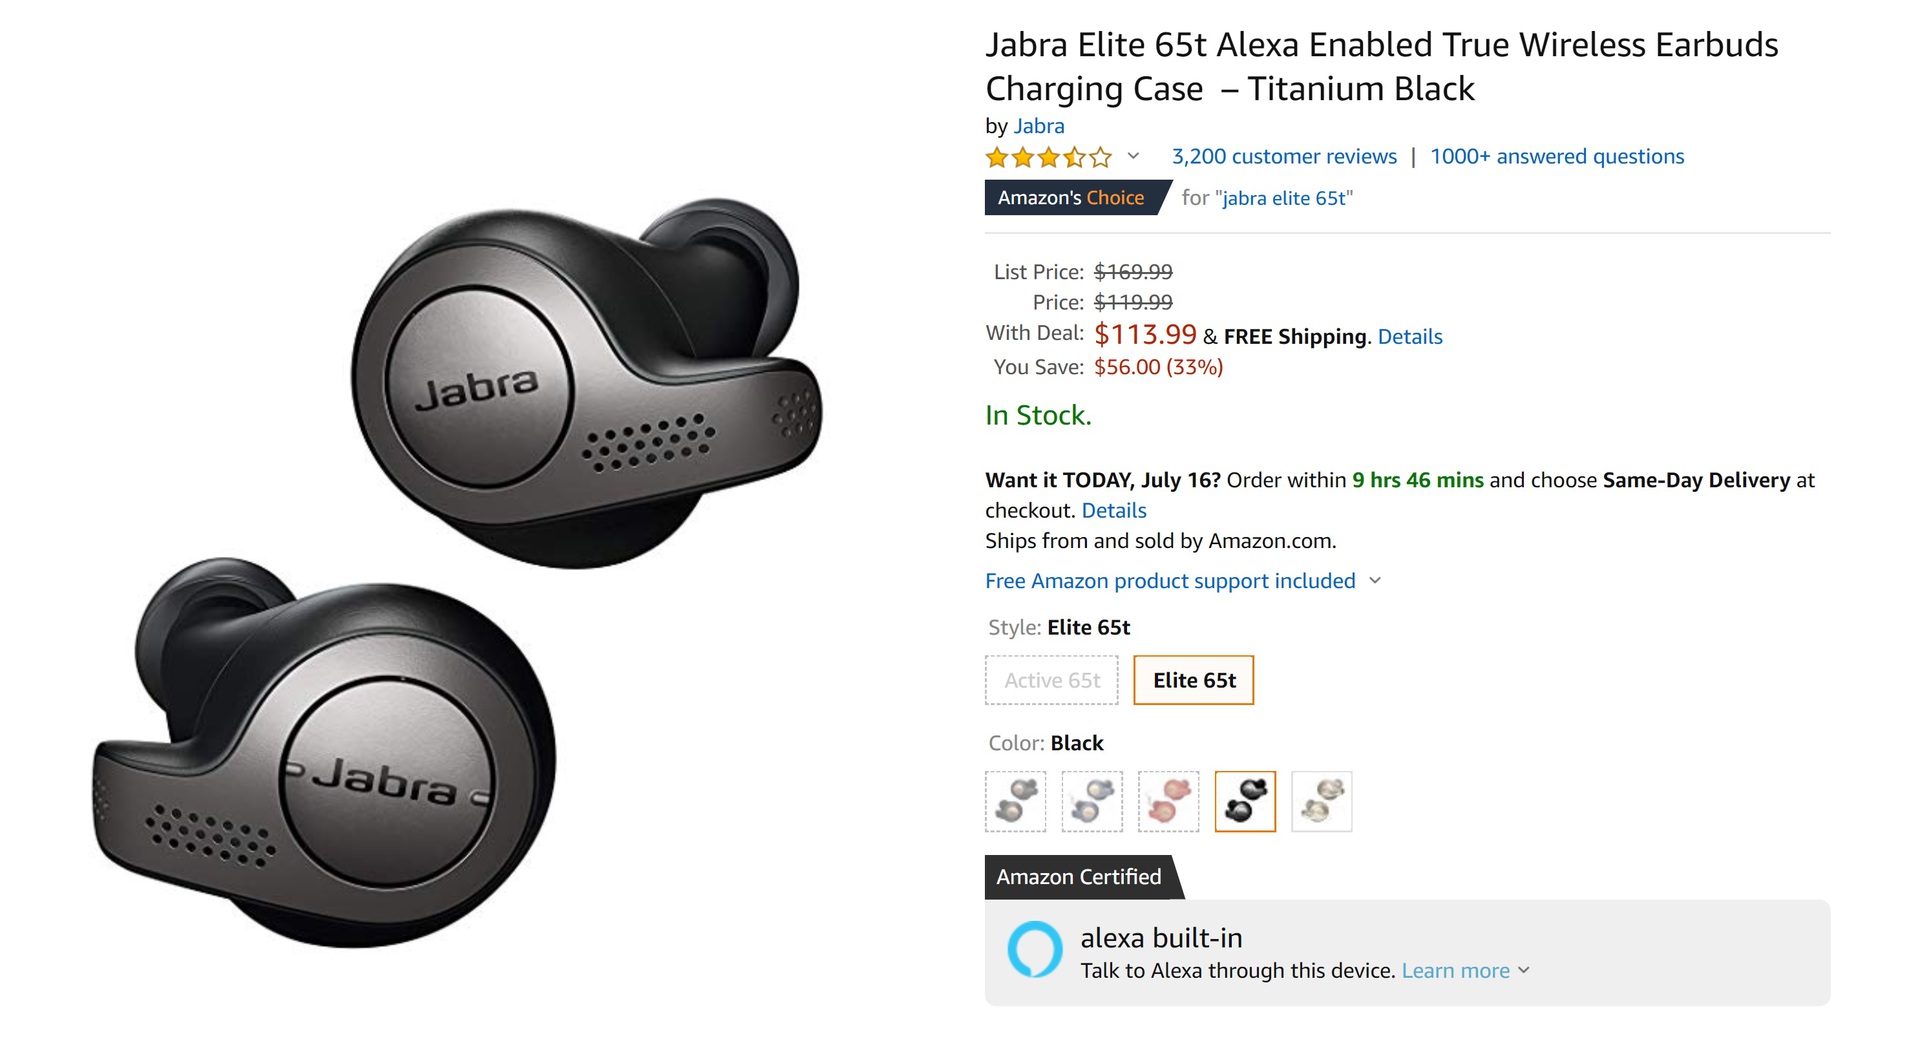 The Amazon store page for the Jabra Elite 65t headphones 